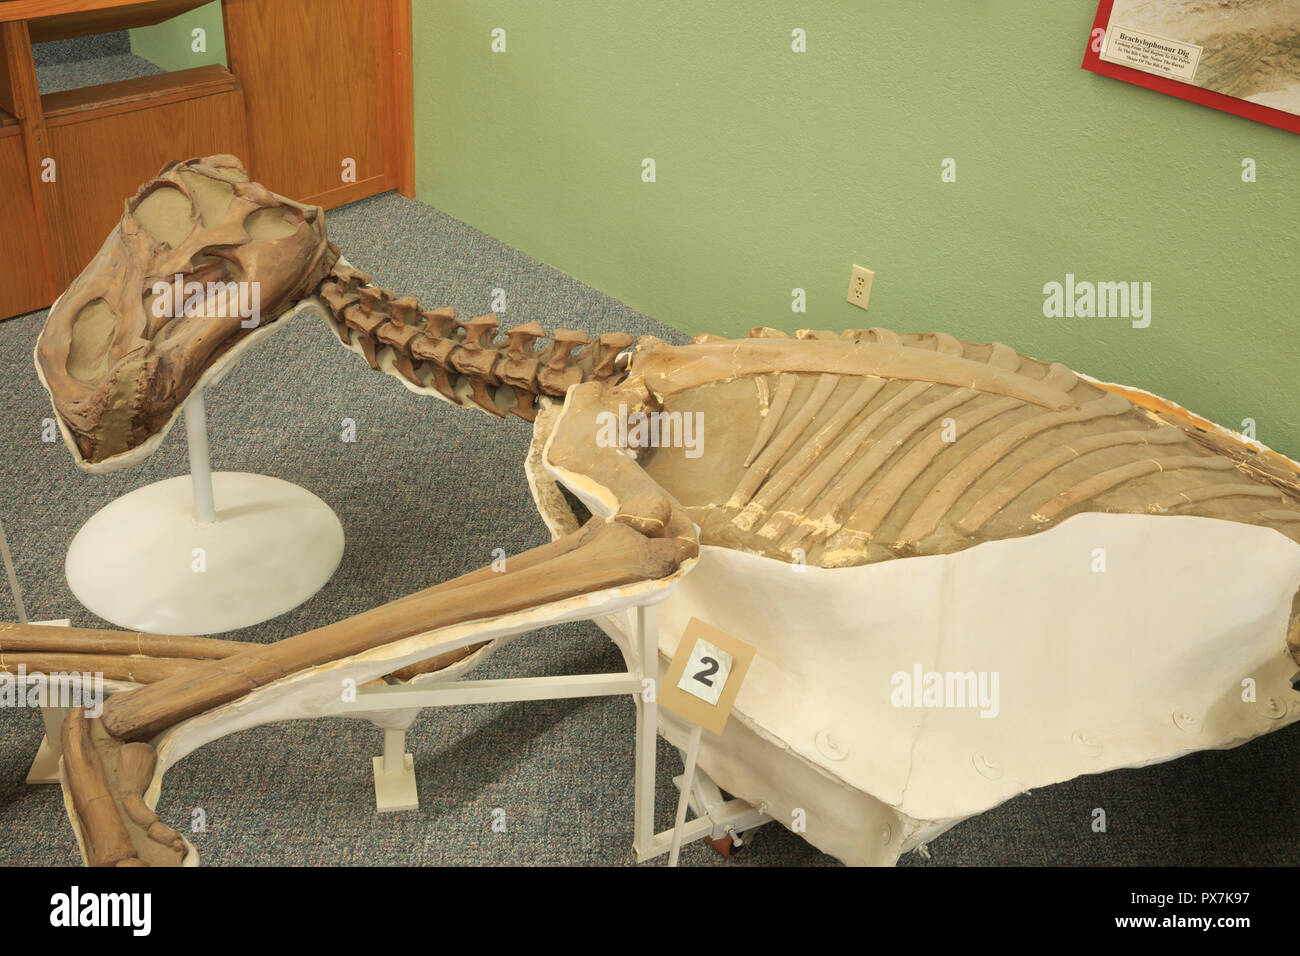 dinosaur display at phillips county museum in malta, montana Stock Photo